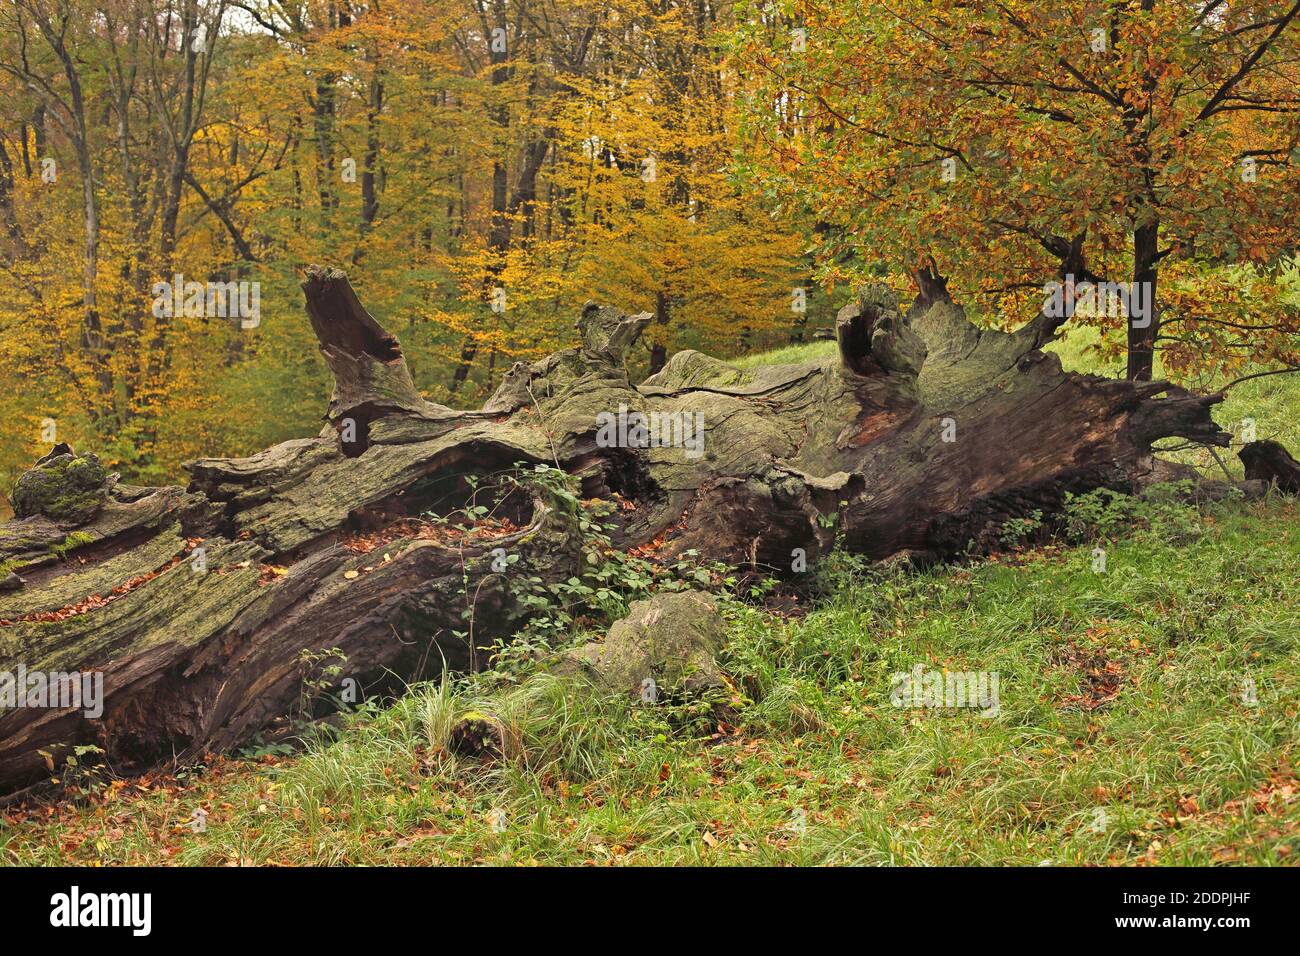 common beech (Fagus sylvatica), dead old beech log in autumn, Germany, Saxony, Bad Muskau, Pueckler Park Stock Photo